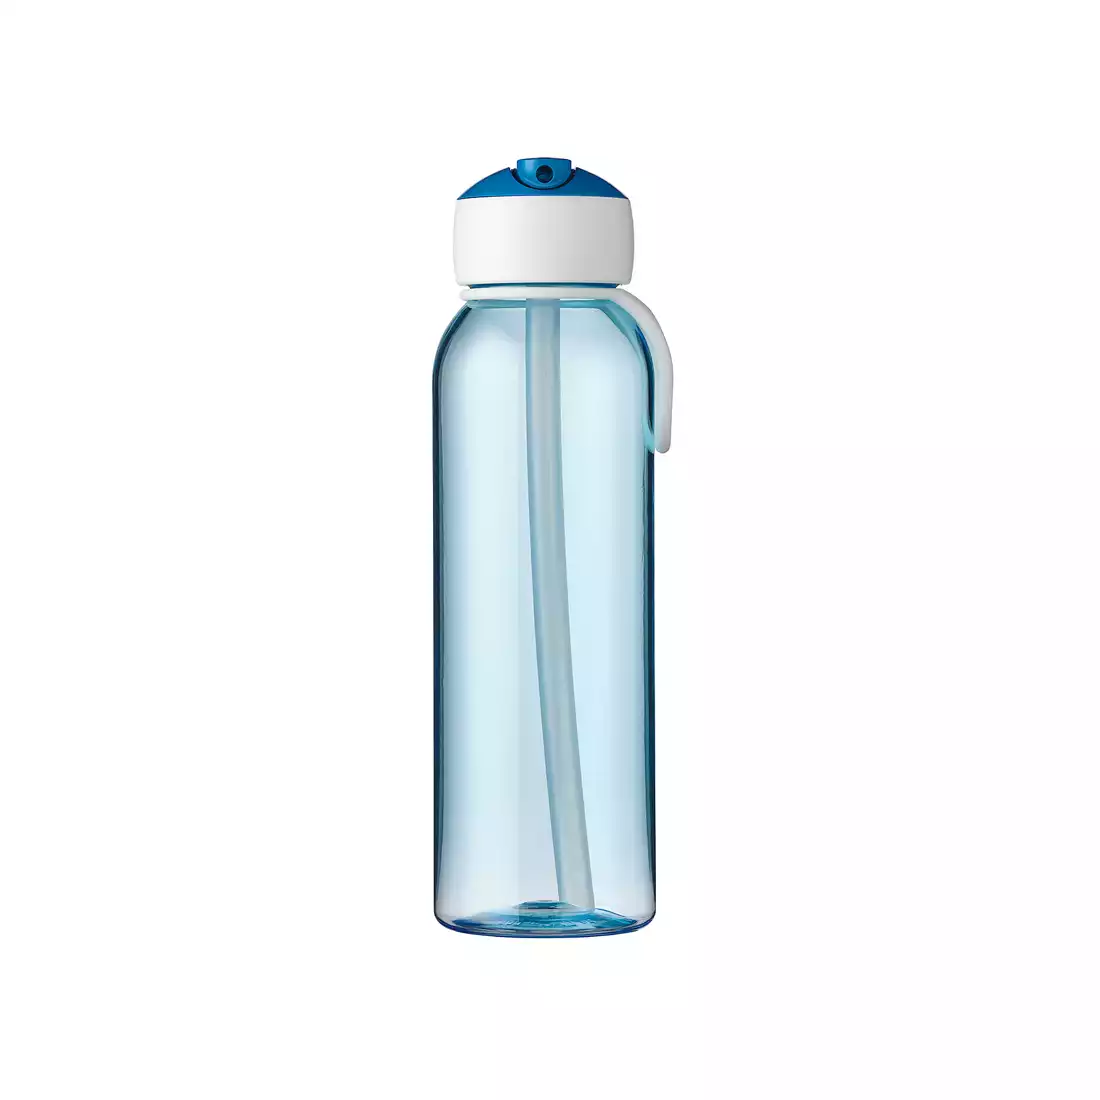 MEPAL FLIP-UP CAMPUS 500 ml water bottle, blue